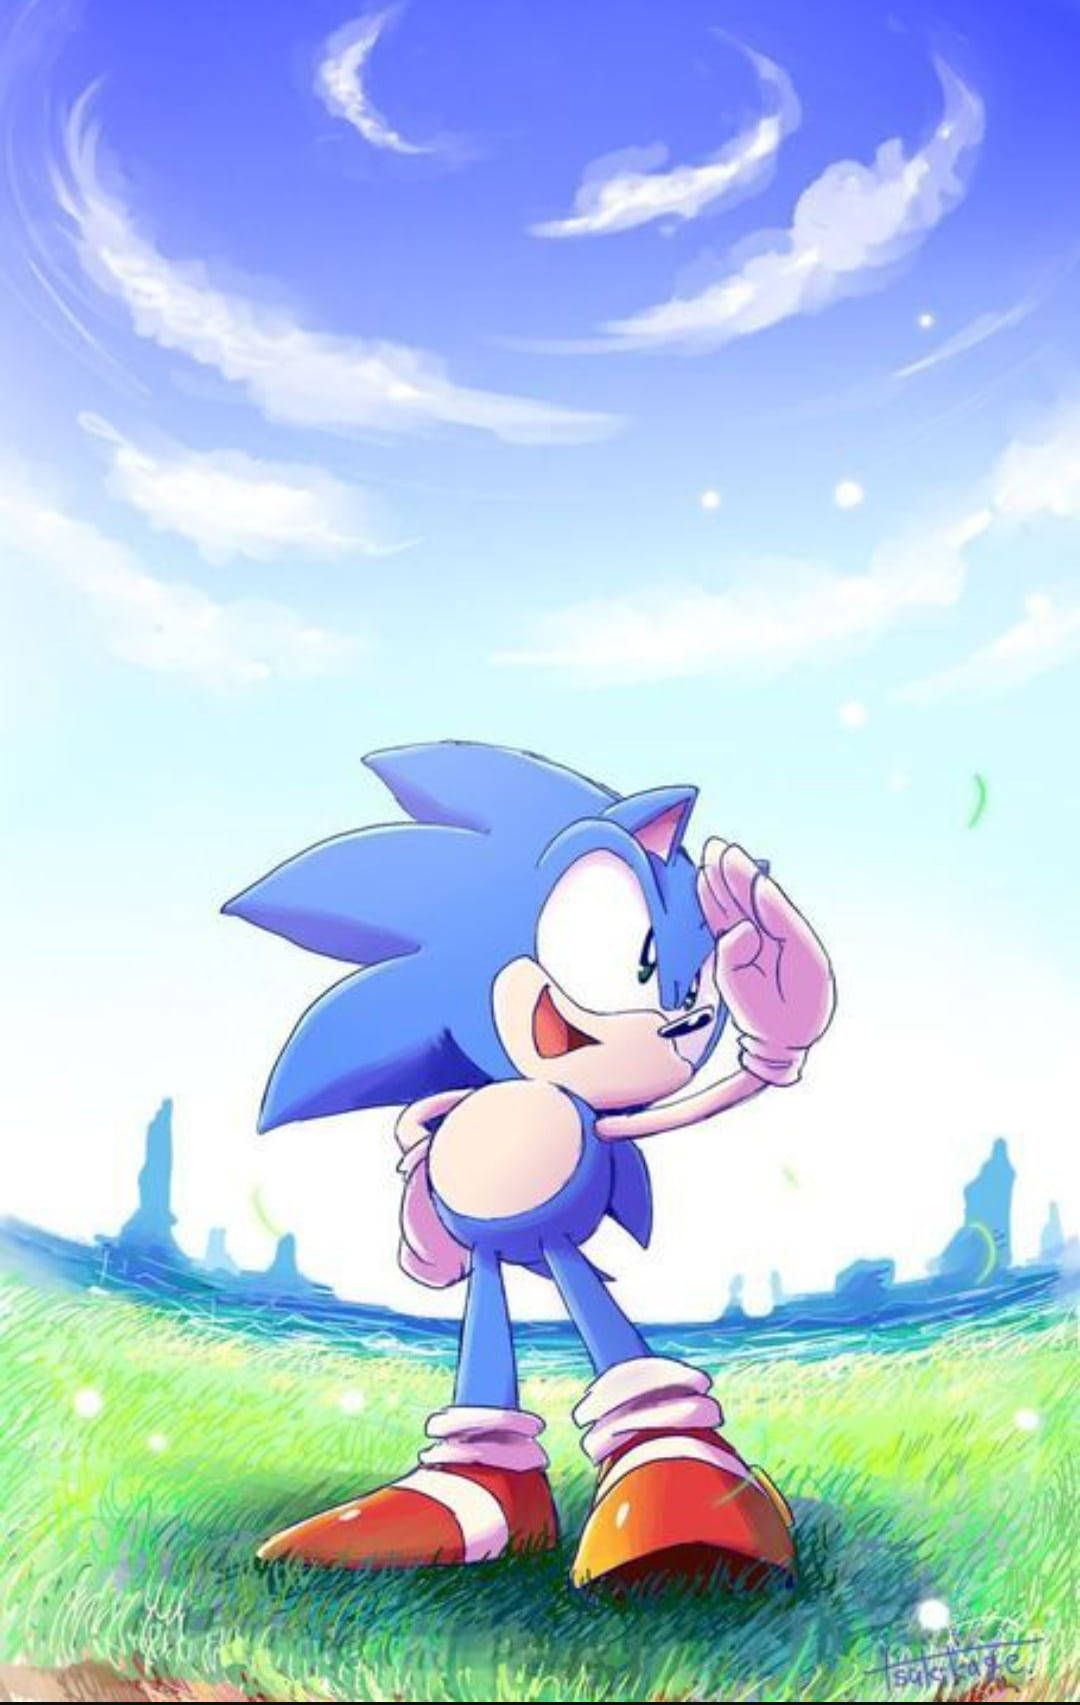 Download Sonic The Hedgehog in Joyful Acceleration Wallpaper